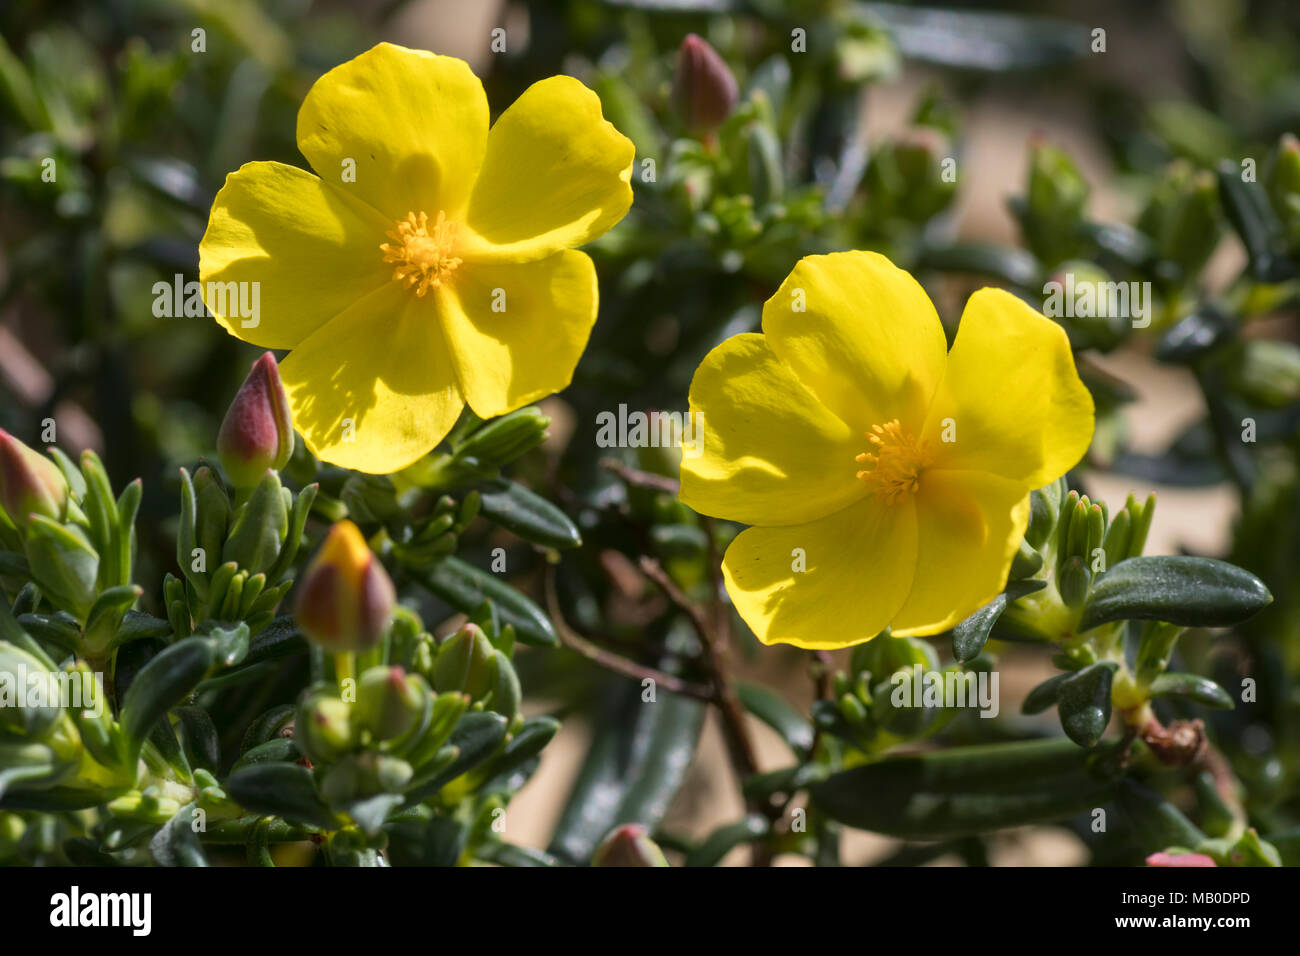 Yellow flowers of the shrubby evergreen sun rose, Halimium calycinum, in spring Stock Photo